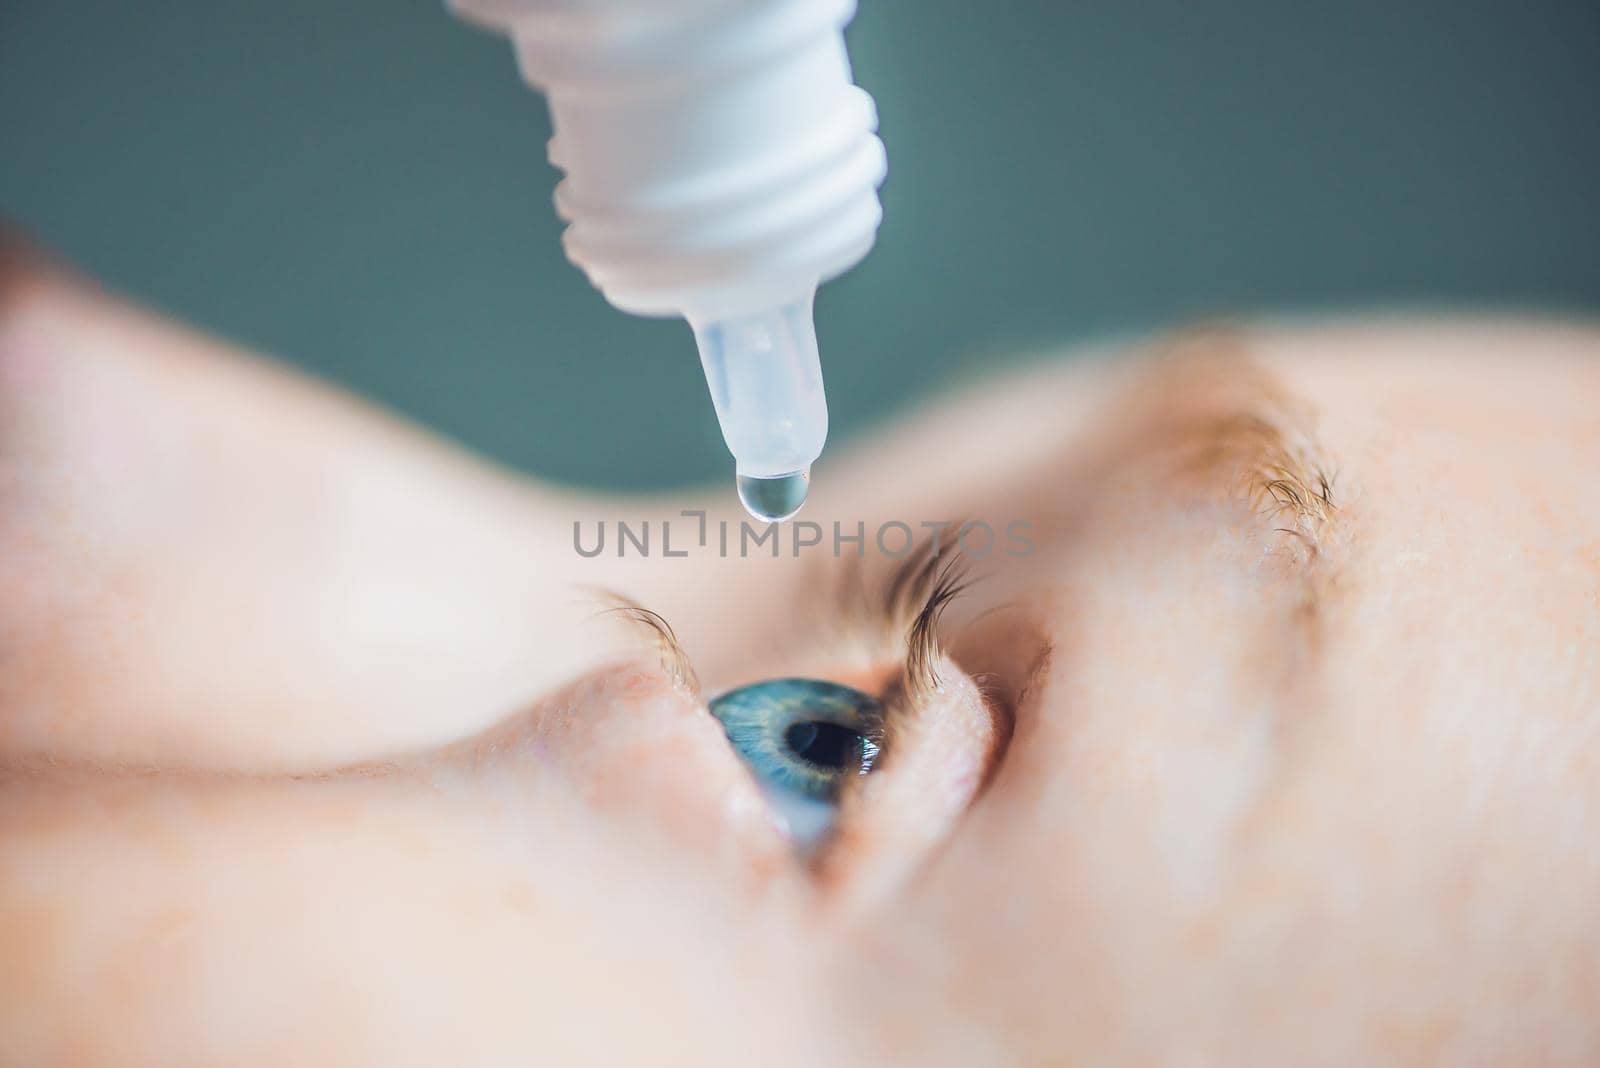 Closeup of eyedropper putting liquid into open eye.